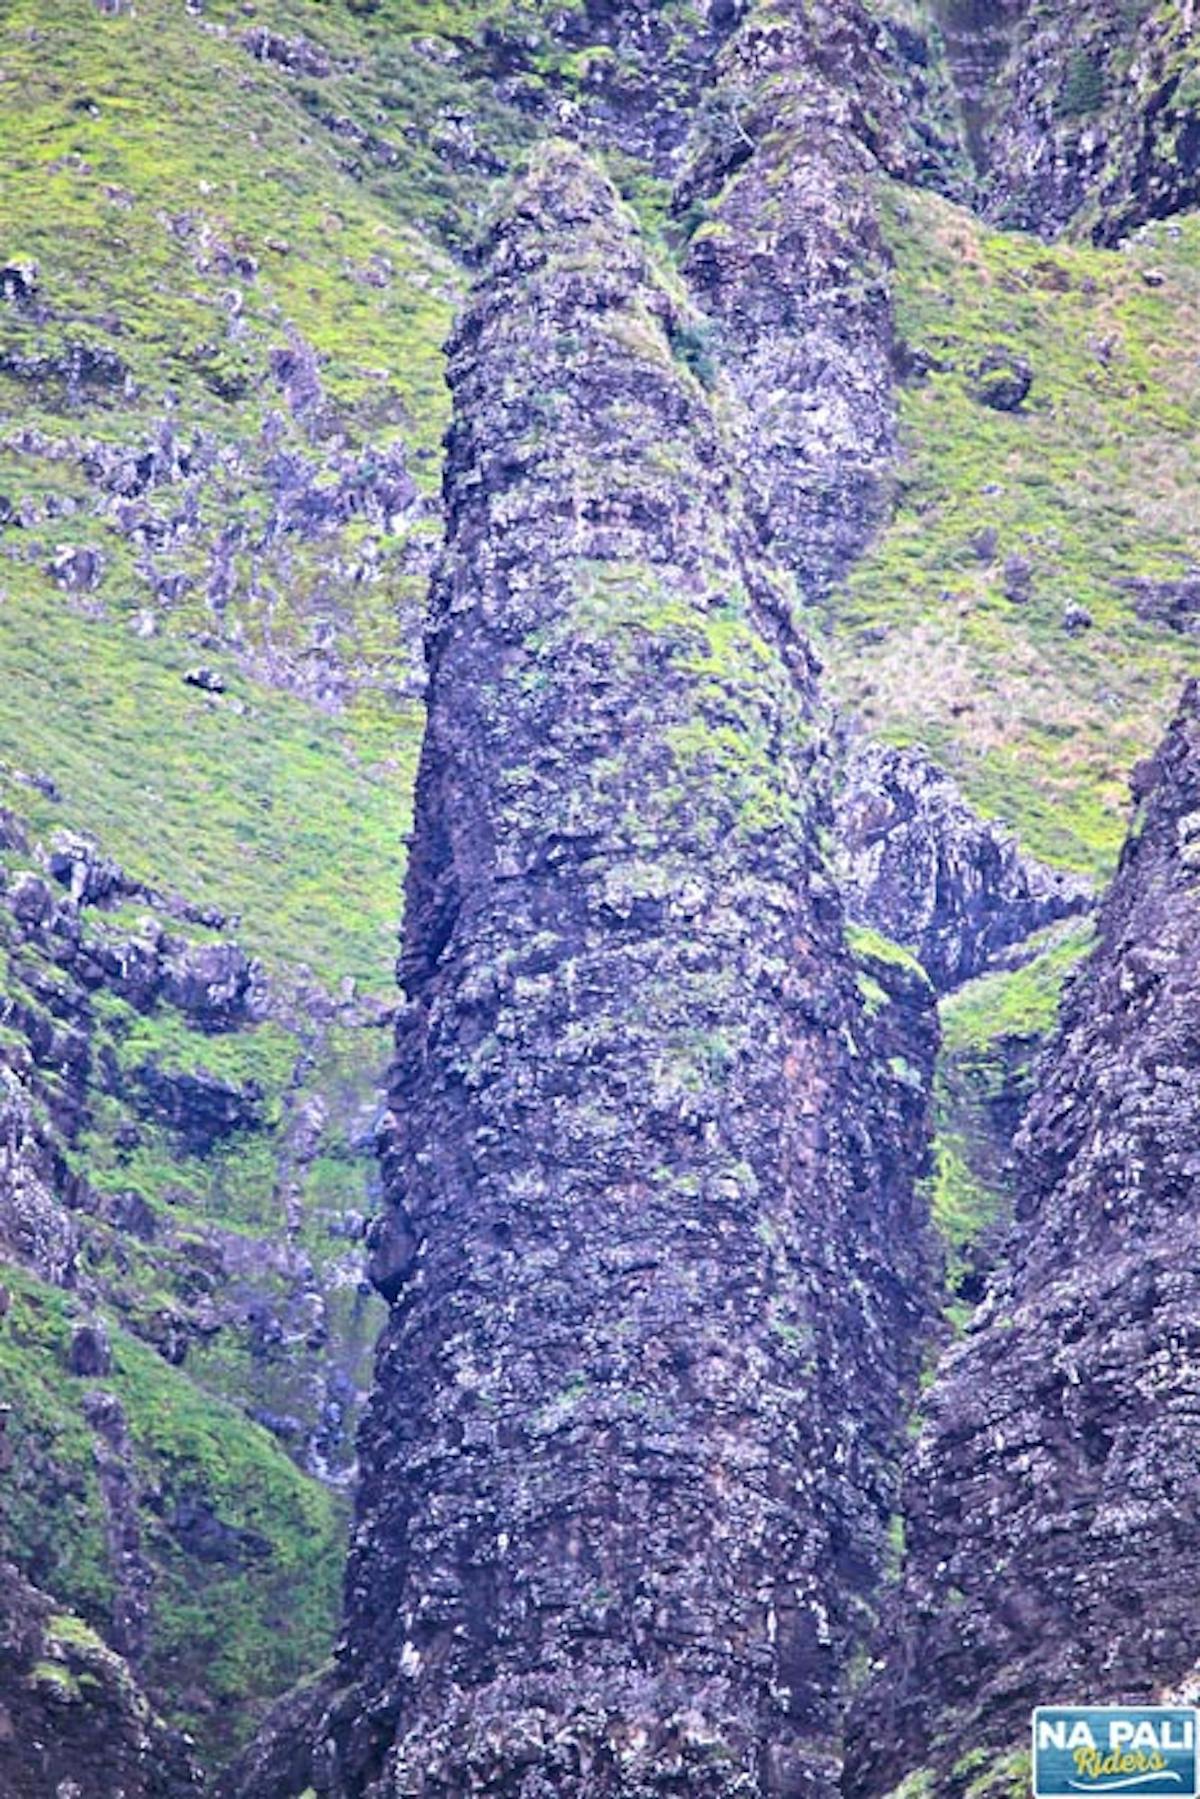 a close up of a hillside next to a forest